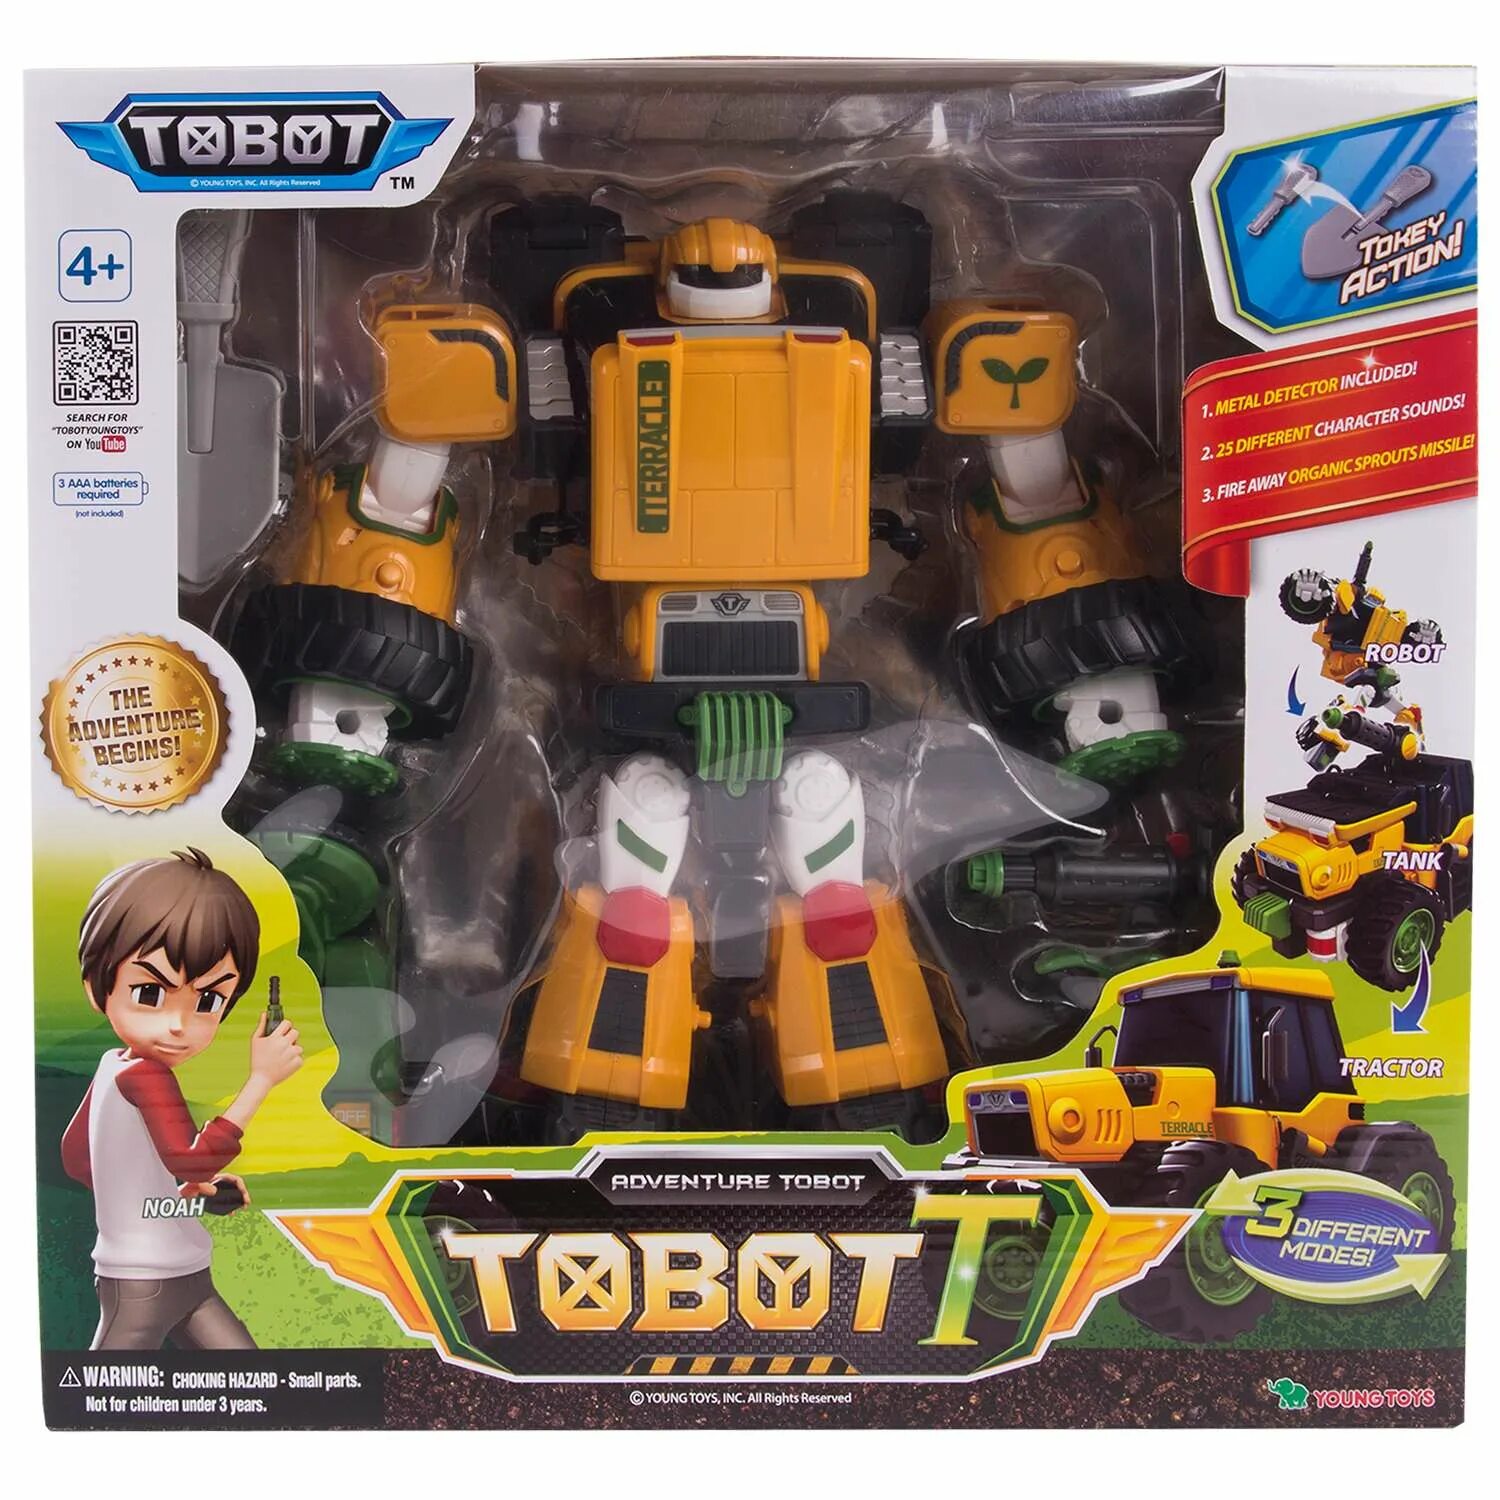 Трансформер young Toys Tobot Mini Athlon Jango 301079. Трансформер Тобот t 301047. Робот-трансформер young Toys Tobot t 301047. Трансформер Tobot мини-Тобот т. Озон тобот